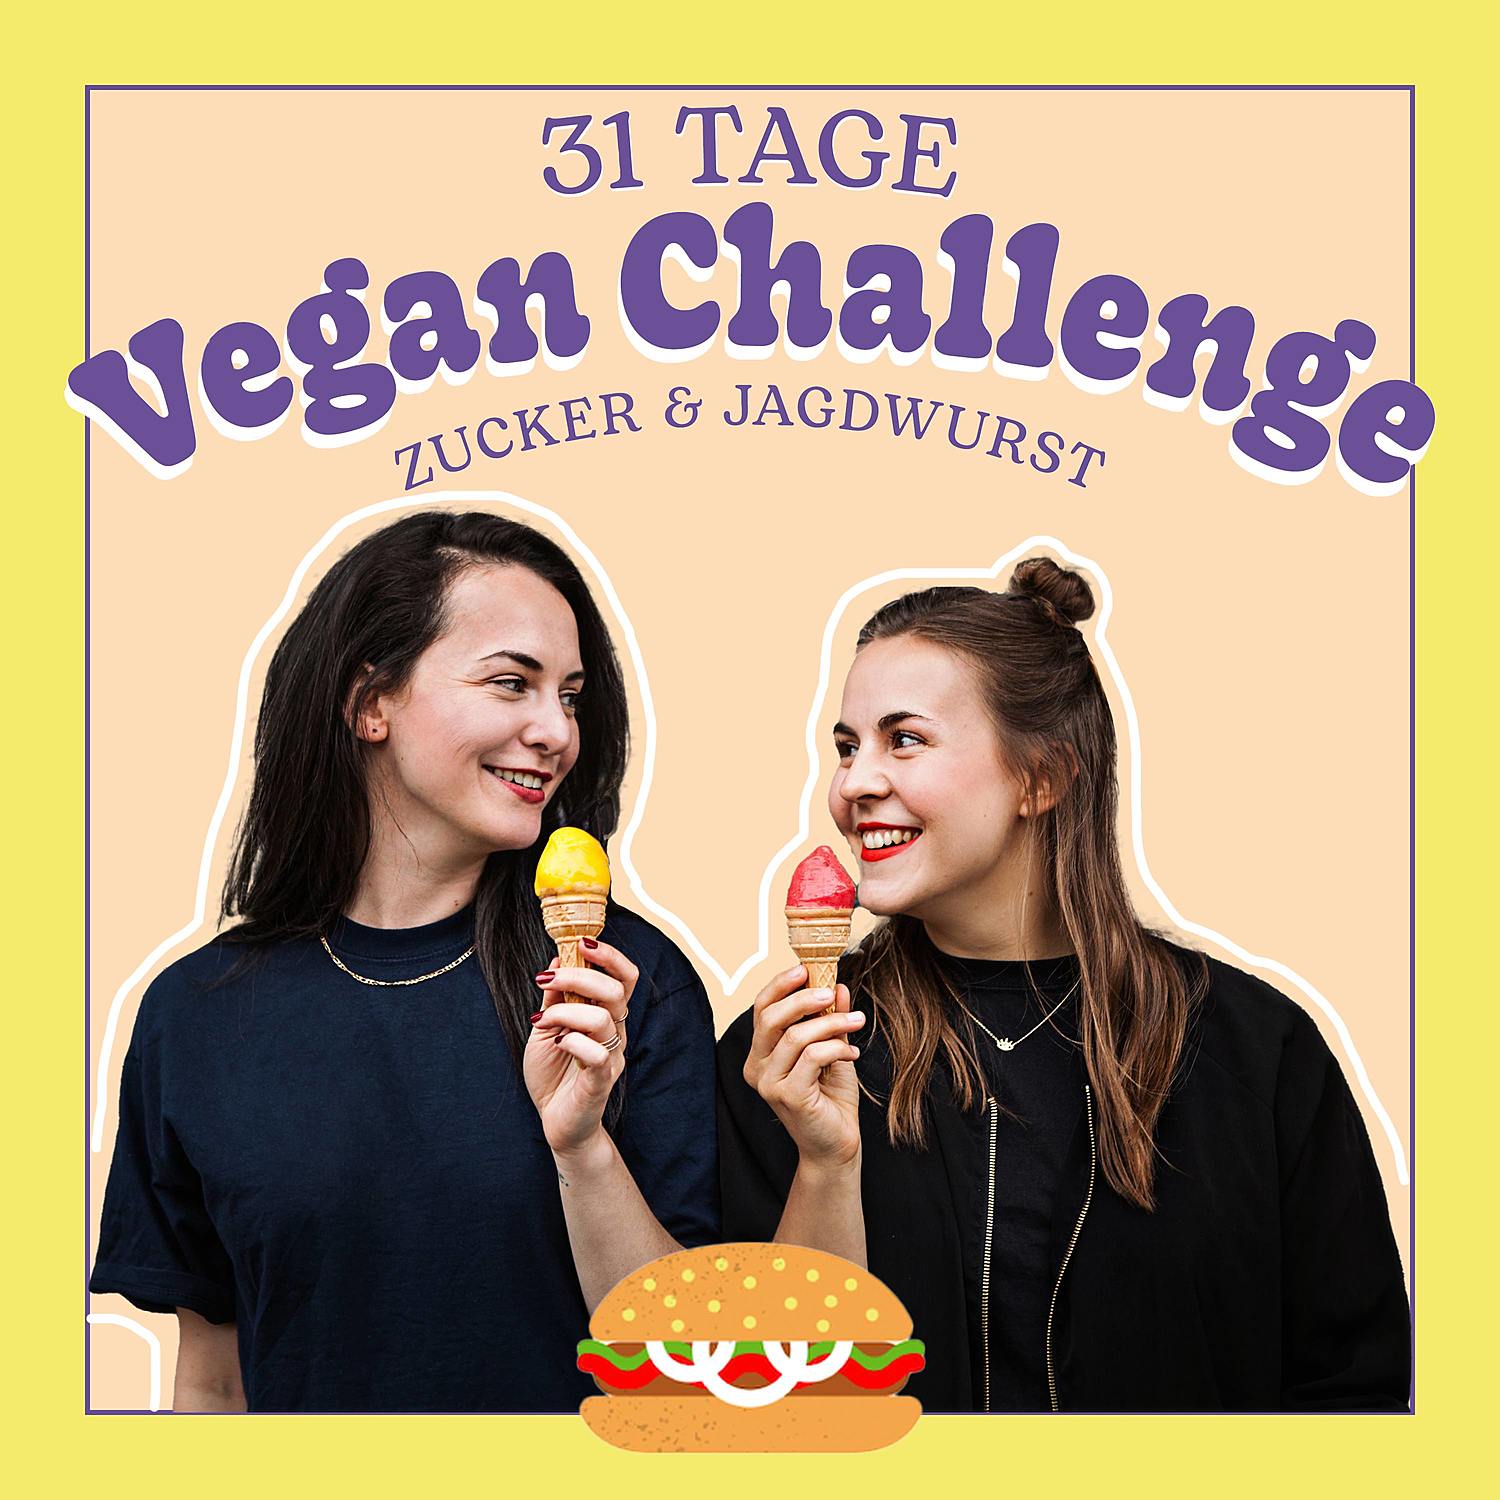 Veganuary Special #3 - 10 Fragen an Aleksandra Keleman zu pflanzlichen Proteinen